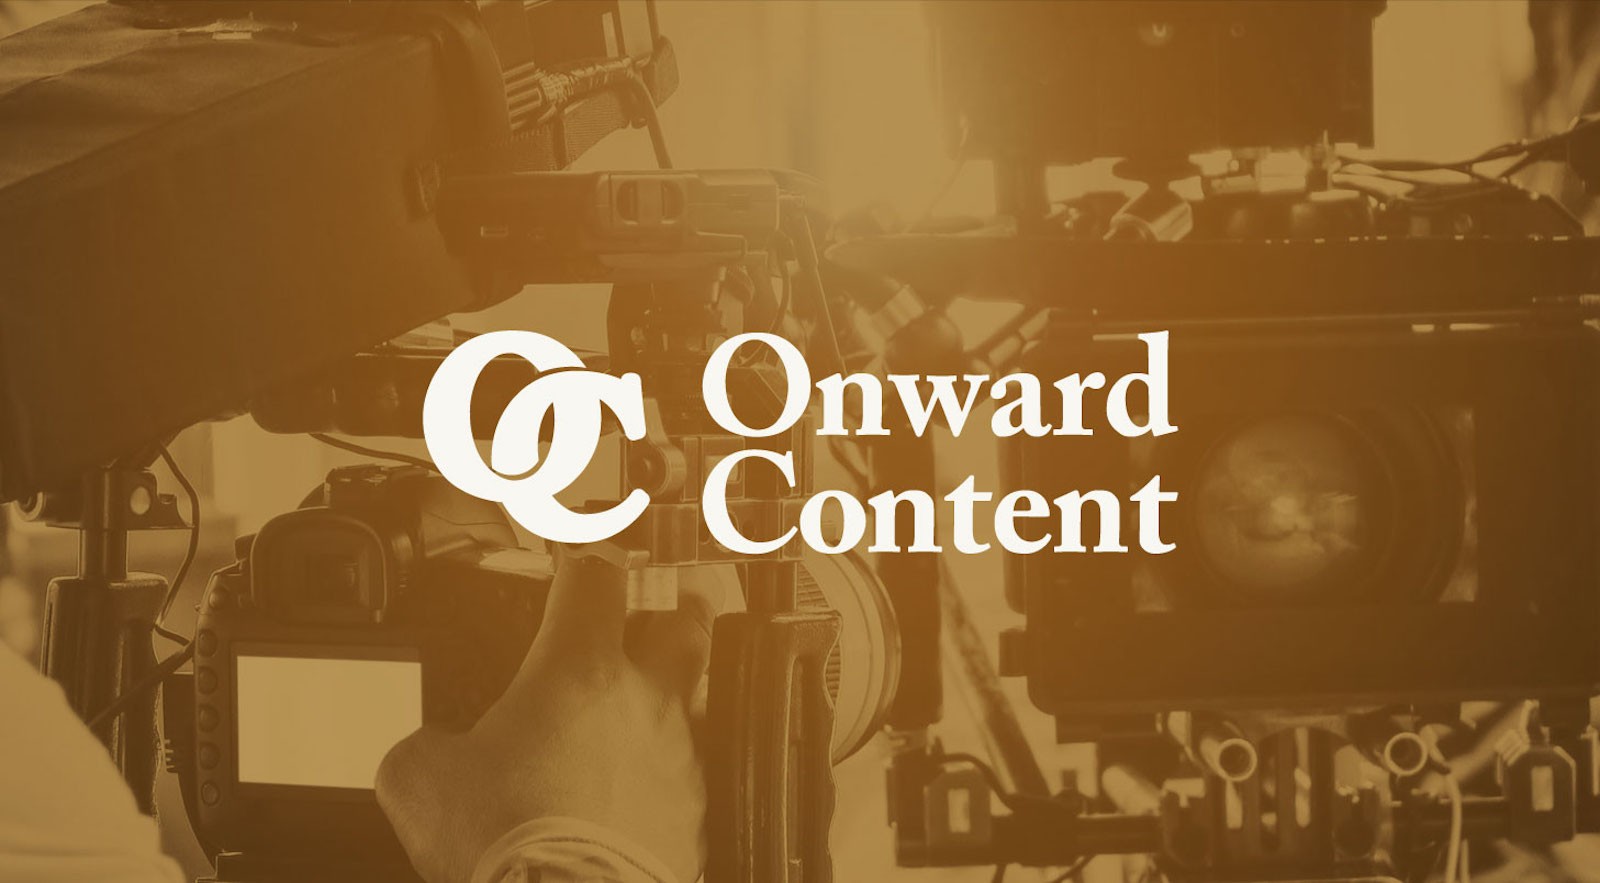 Onward Content logo over a photo of a video camera